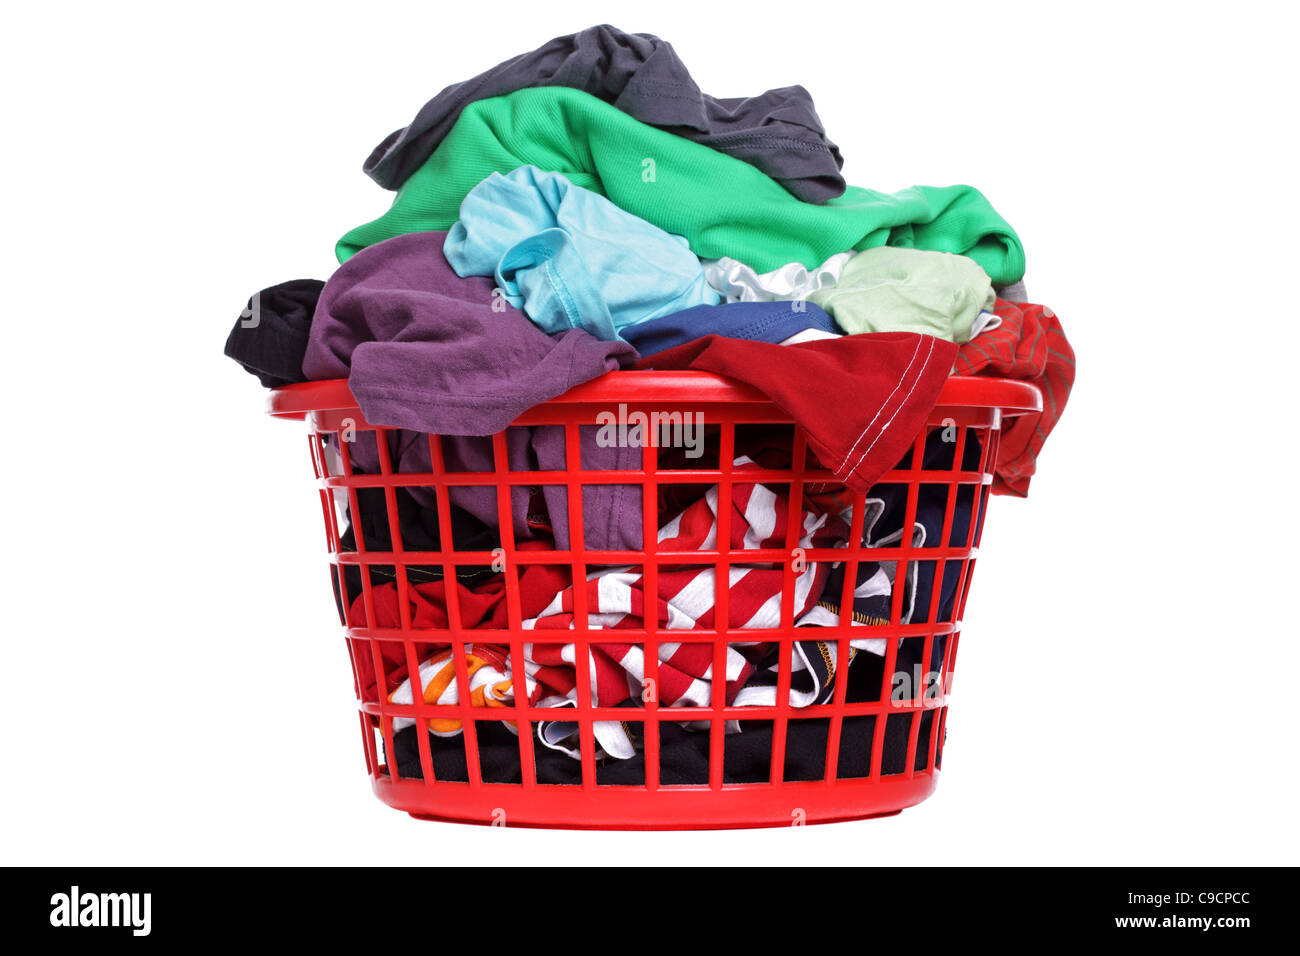 Overflowing Laundry Basket Stock Photo - Download Image Now - Laundry Basket,  Laundry, Clothing - iStock